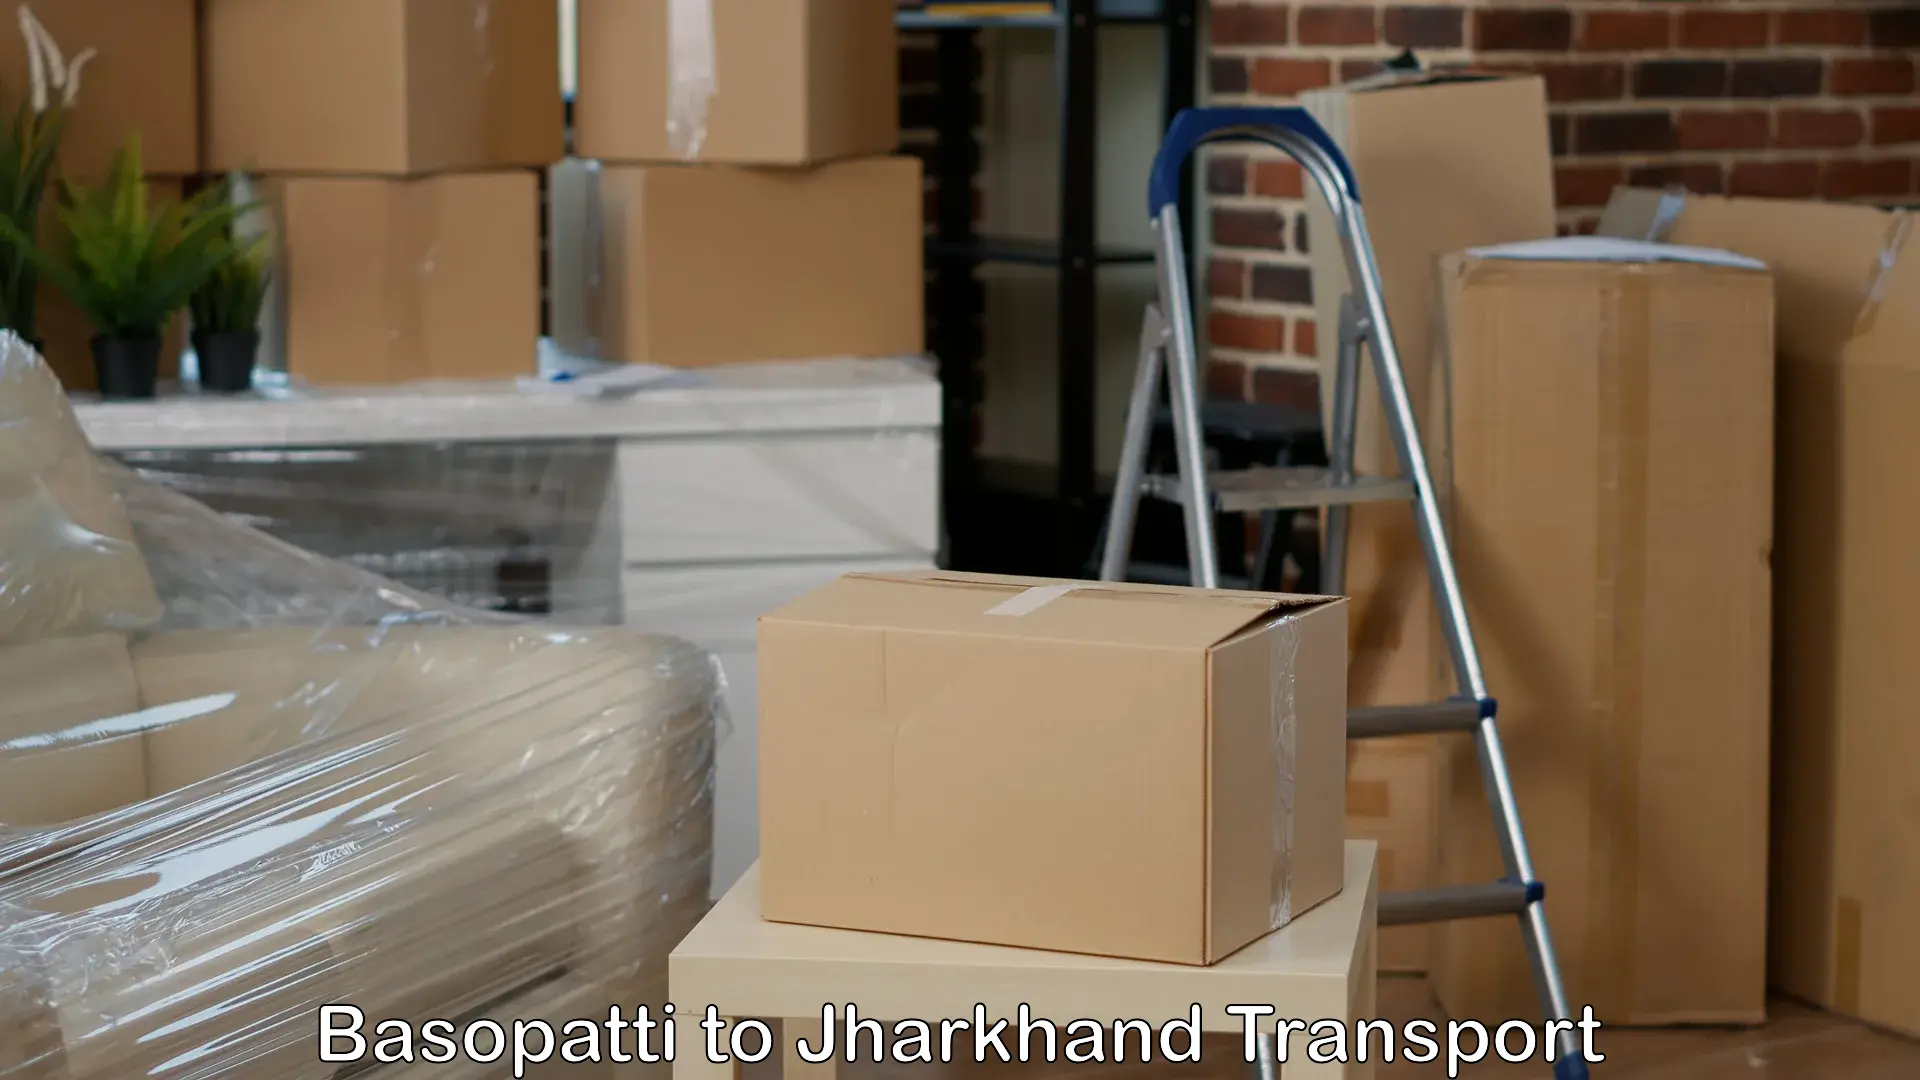 Delivery service Basopatti to Rajmahal